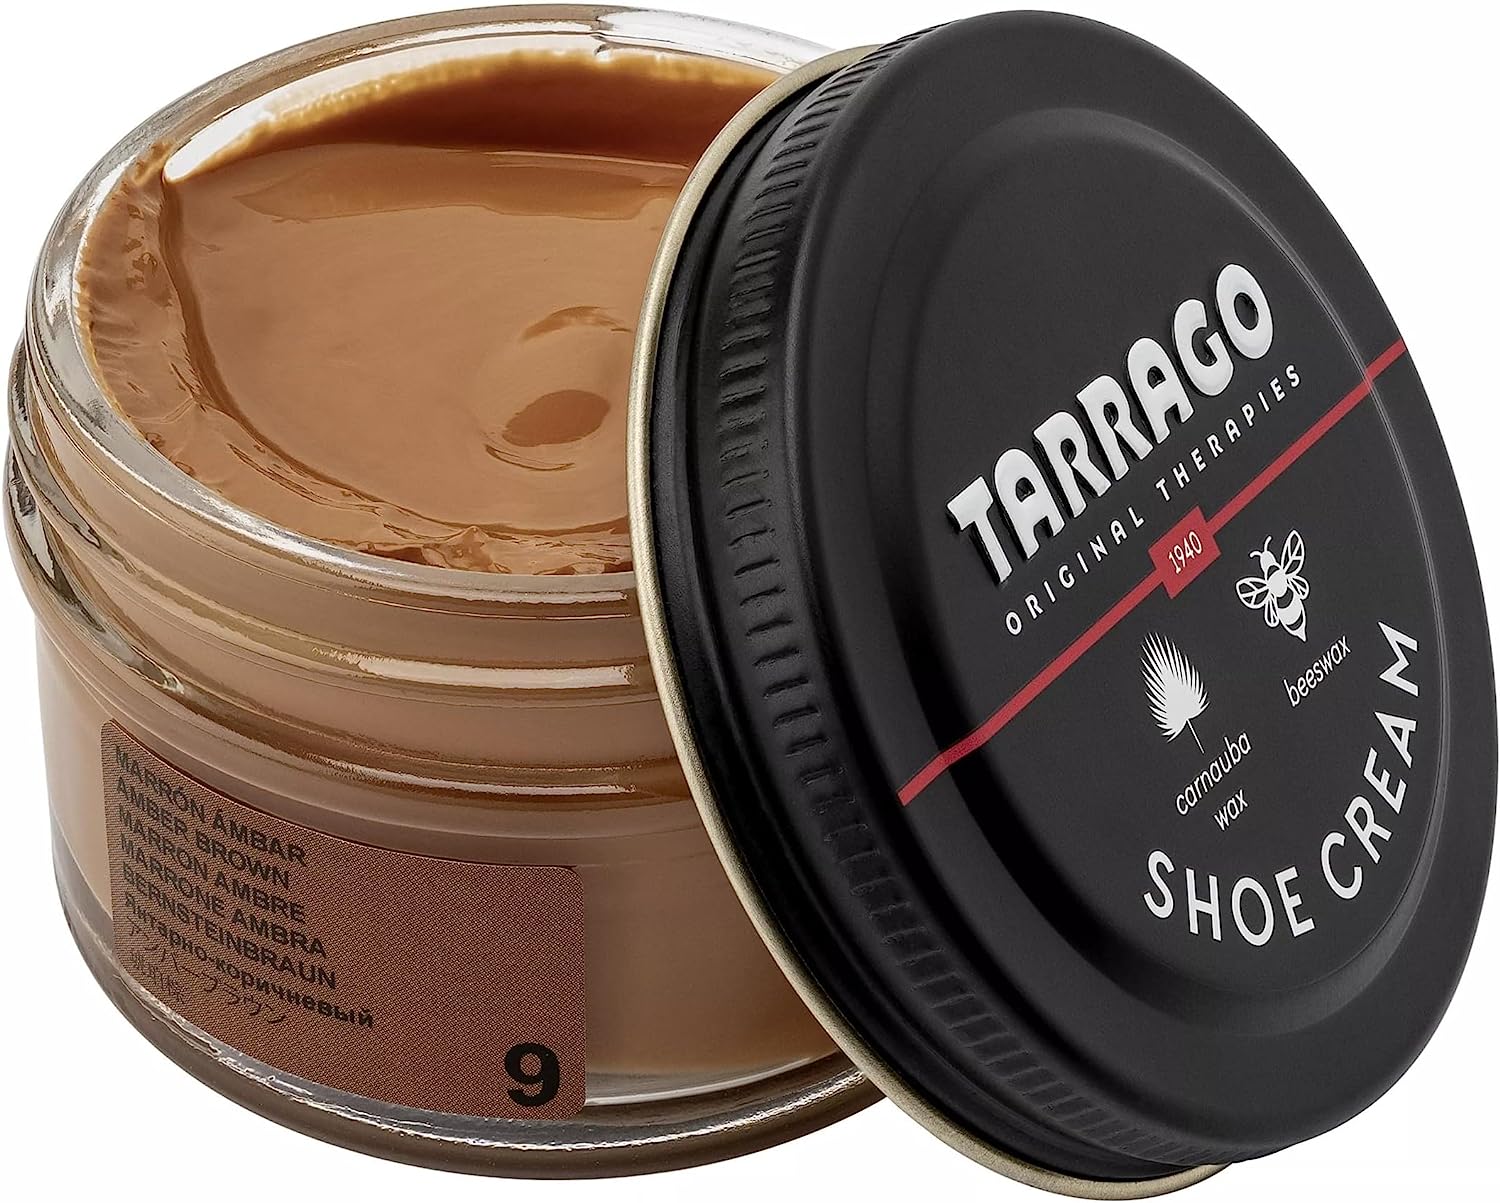 Tarrago Shoe Cream - Professional Shoe Polish with [...]